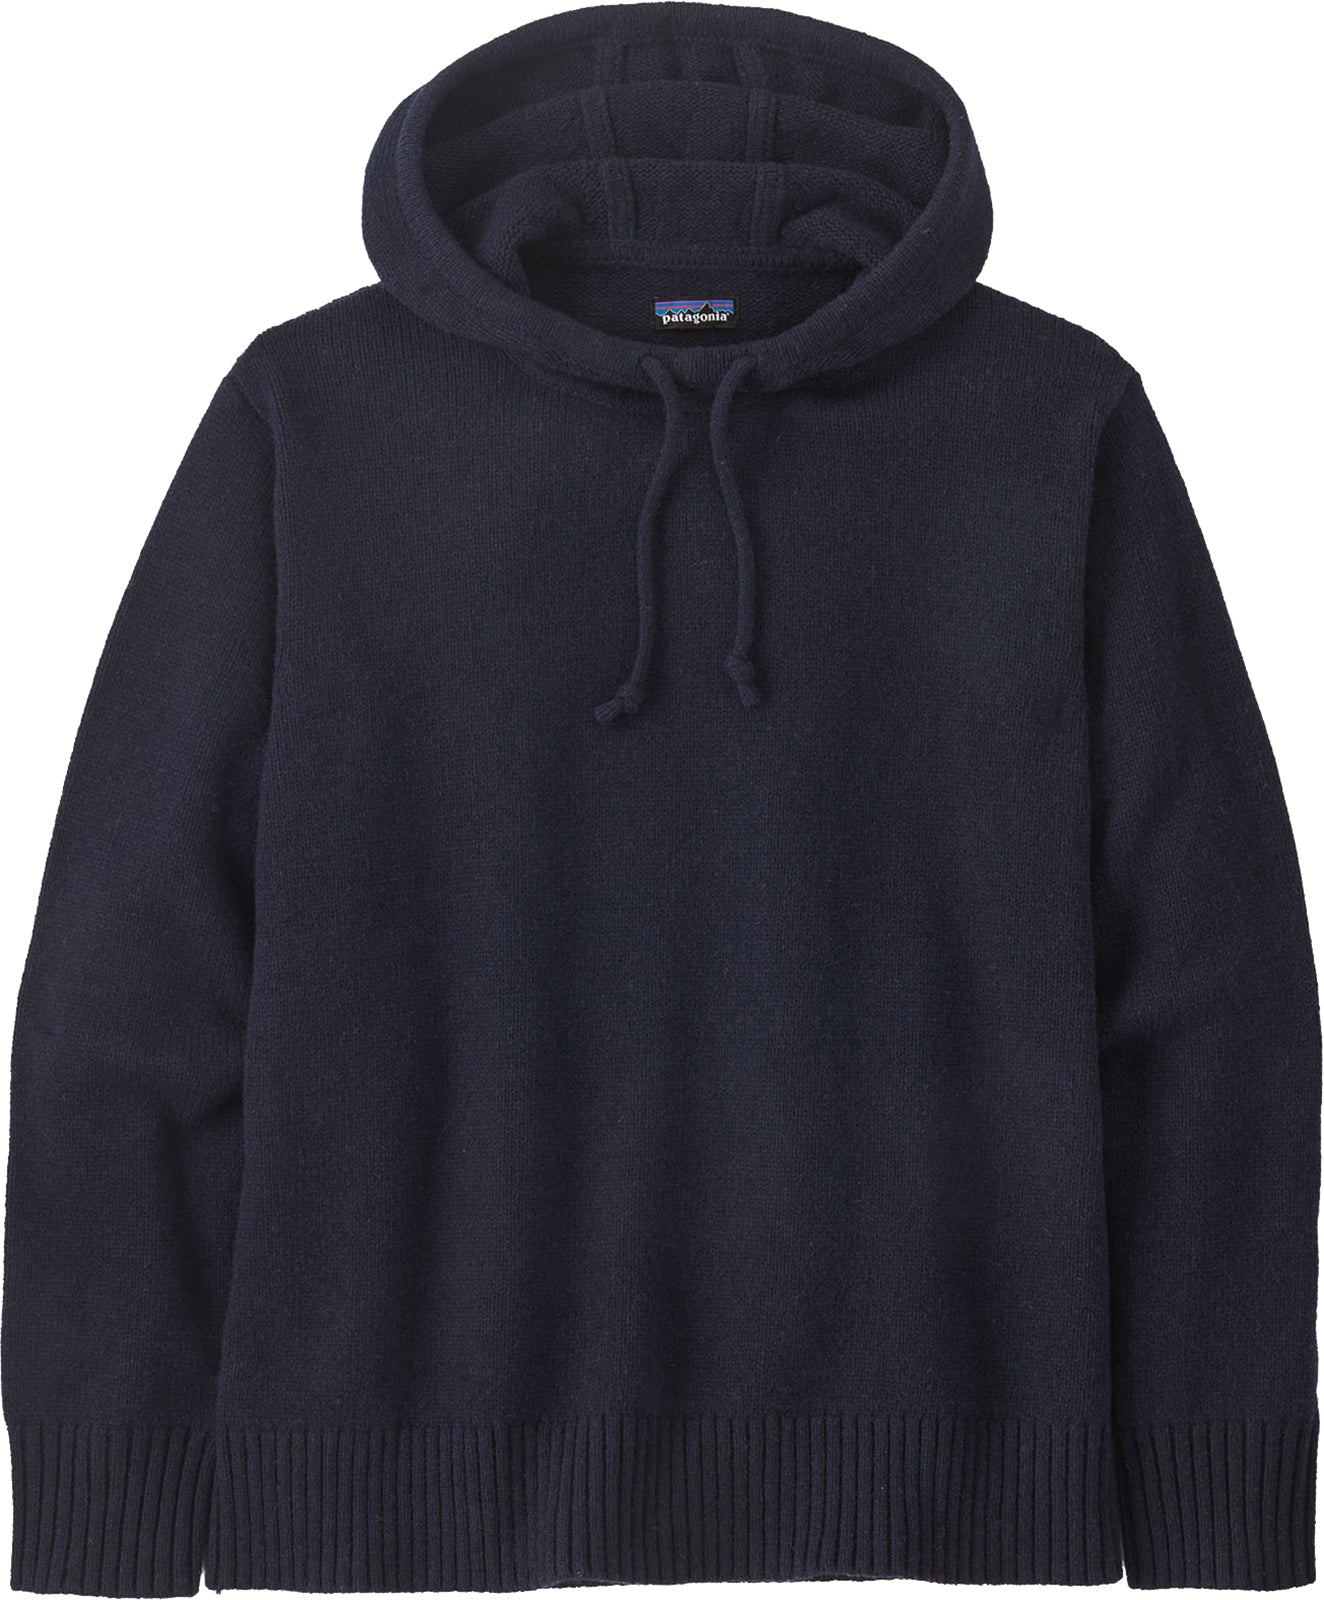 Patagonia Recycled Wool-Blend Sweater Hoody - Men's